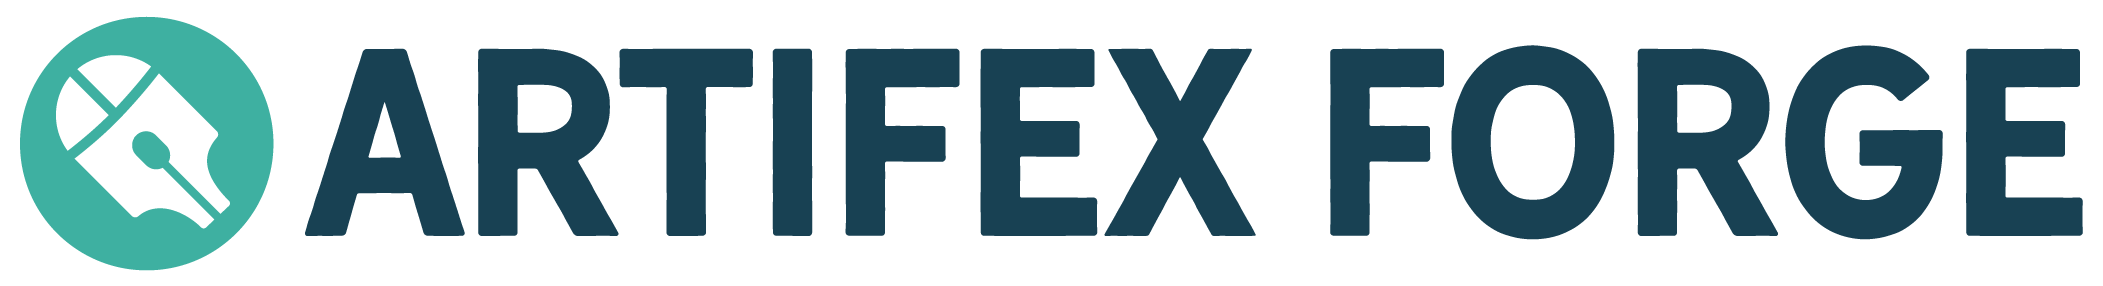 Artifex Forge logo - creator of Adobe Illustrator Brushes, Procreate Brushes and Textures and Affinity Designer Brushes